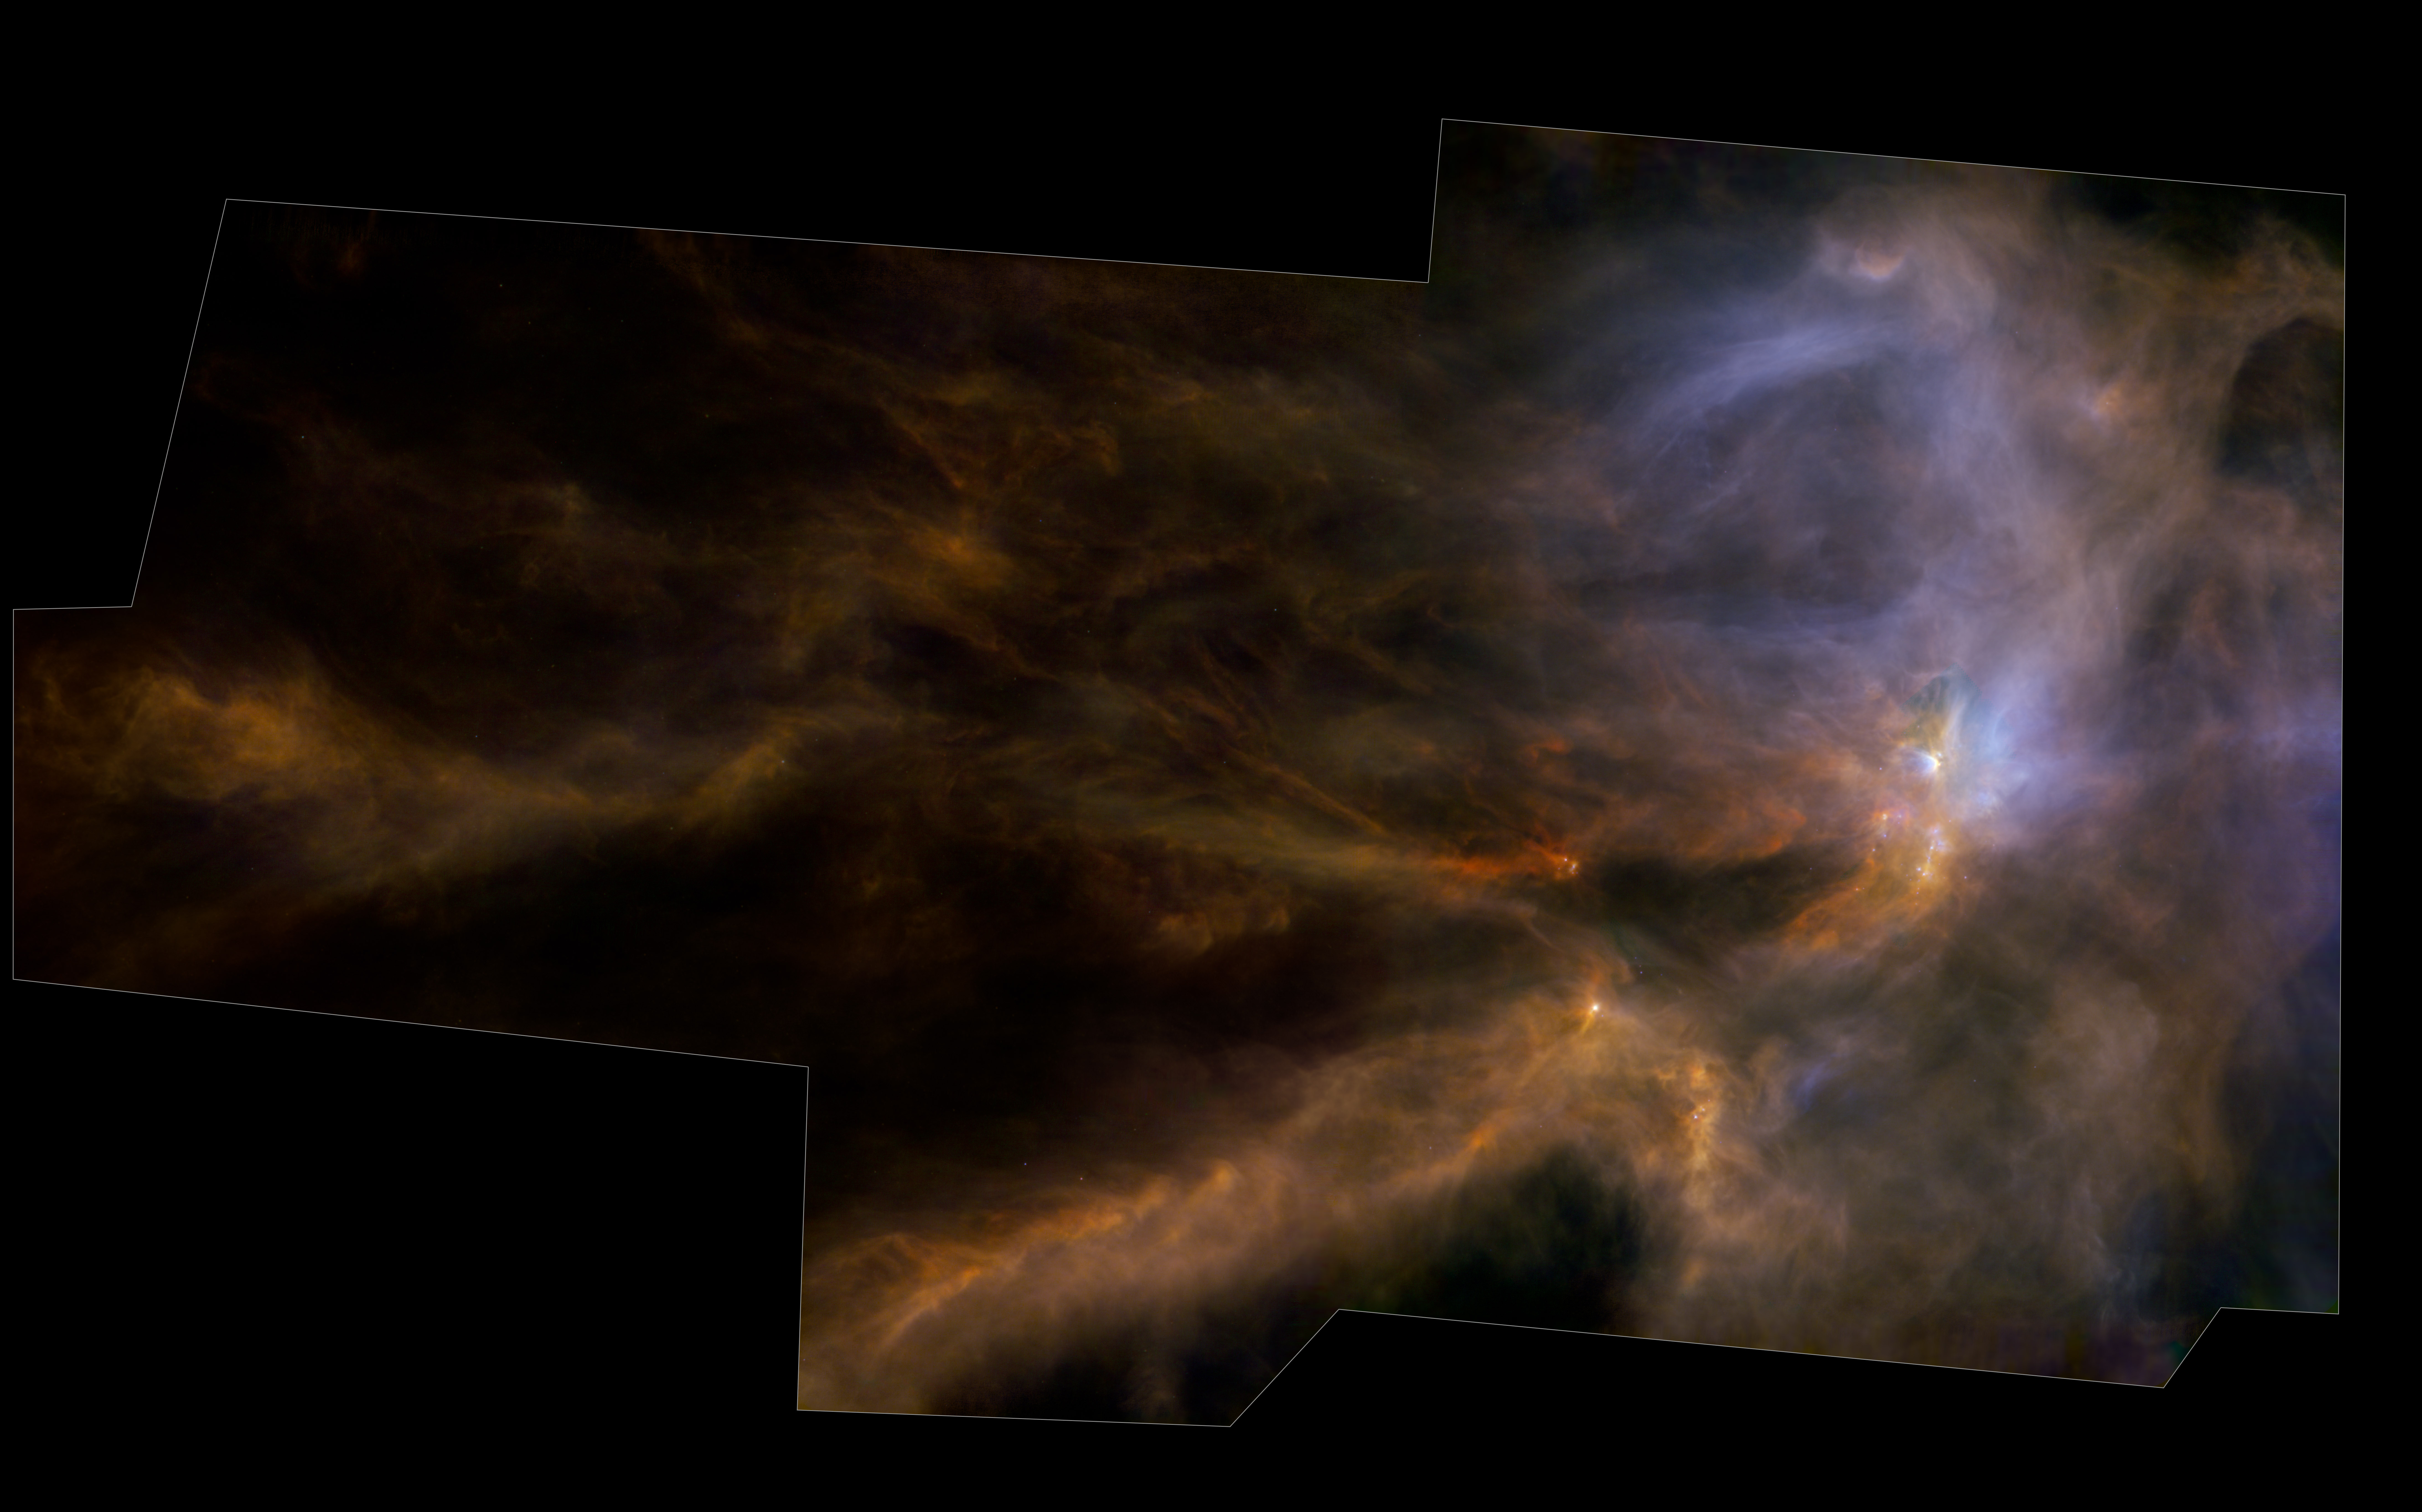 <span style="font-size:16px;position:relative;top:-50px">[ESA/Herschel/NASA/JPL-Caltech; acknowledgement: R. Hurt (JPL-Caltech)](http://www.esa.int/spaceinimages/Images/2017/09/Herschel_s_view_of_a_star_nursery)</span>